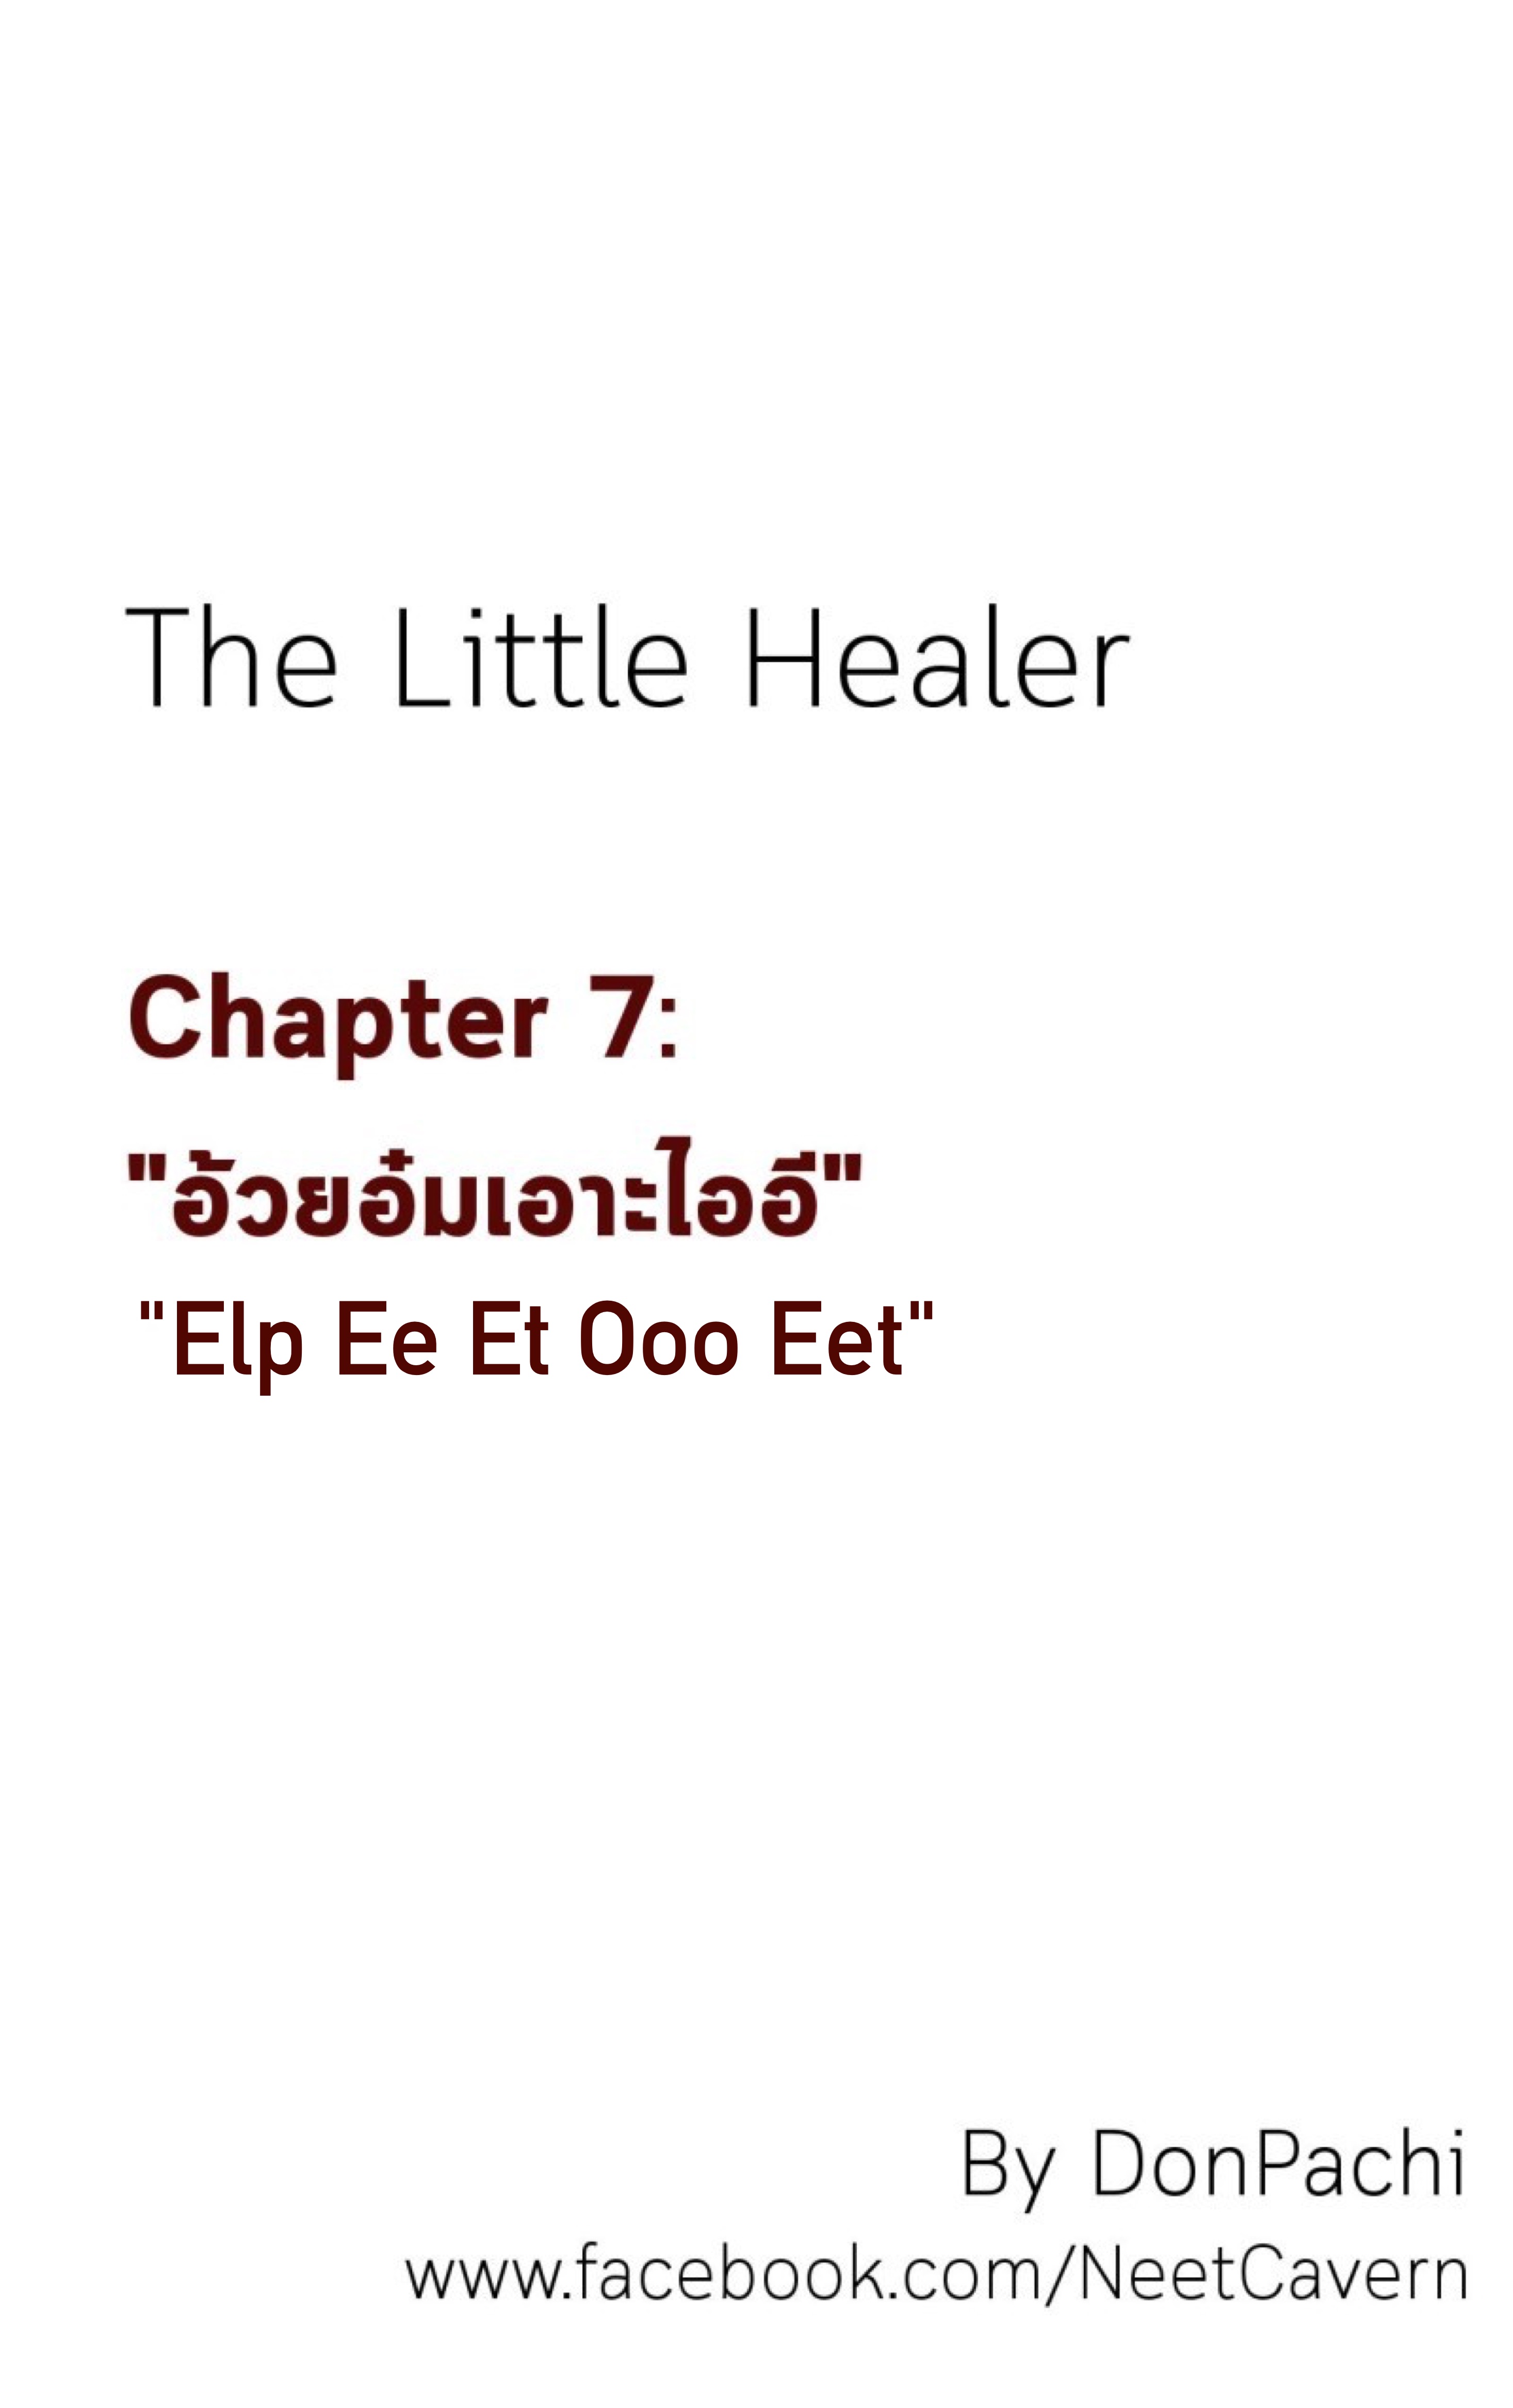 The Little Healer Chapter 7: 